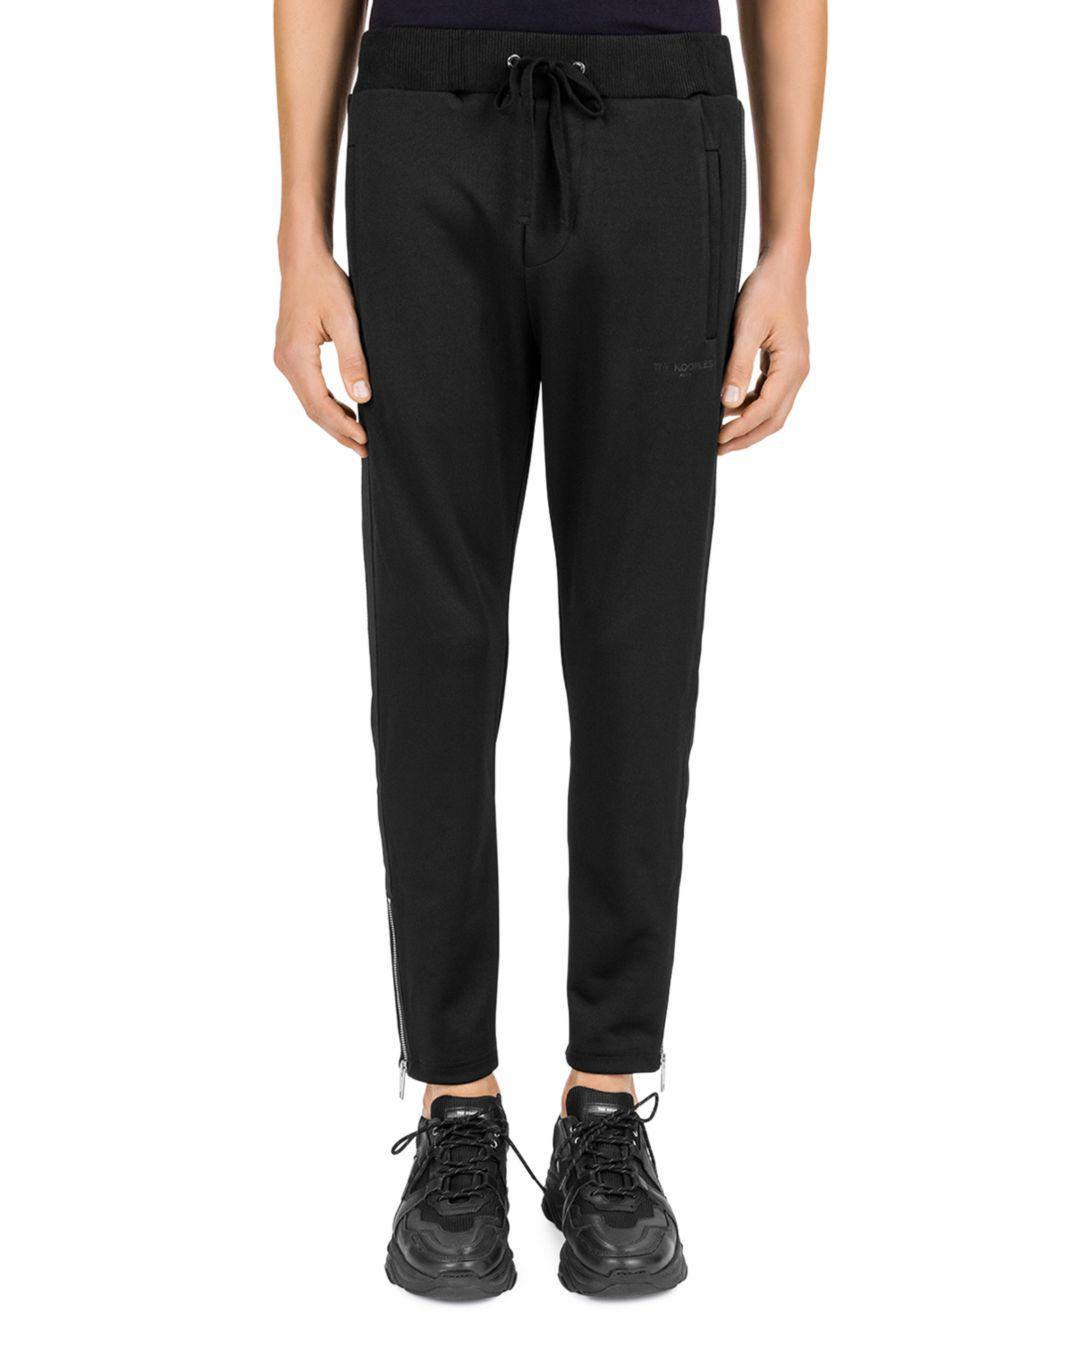 Lyst - The Kooples Technical Fleece Slim Fit Sweatpants in Black for Men